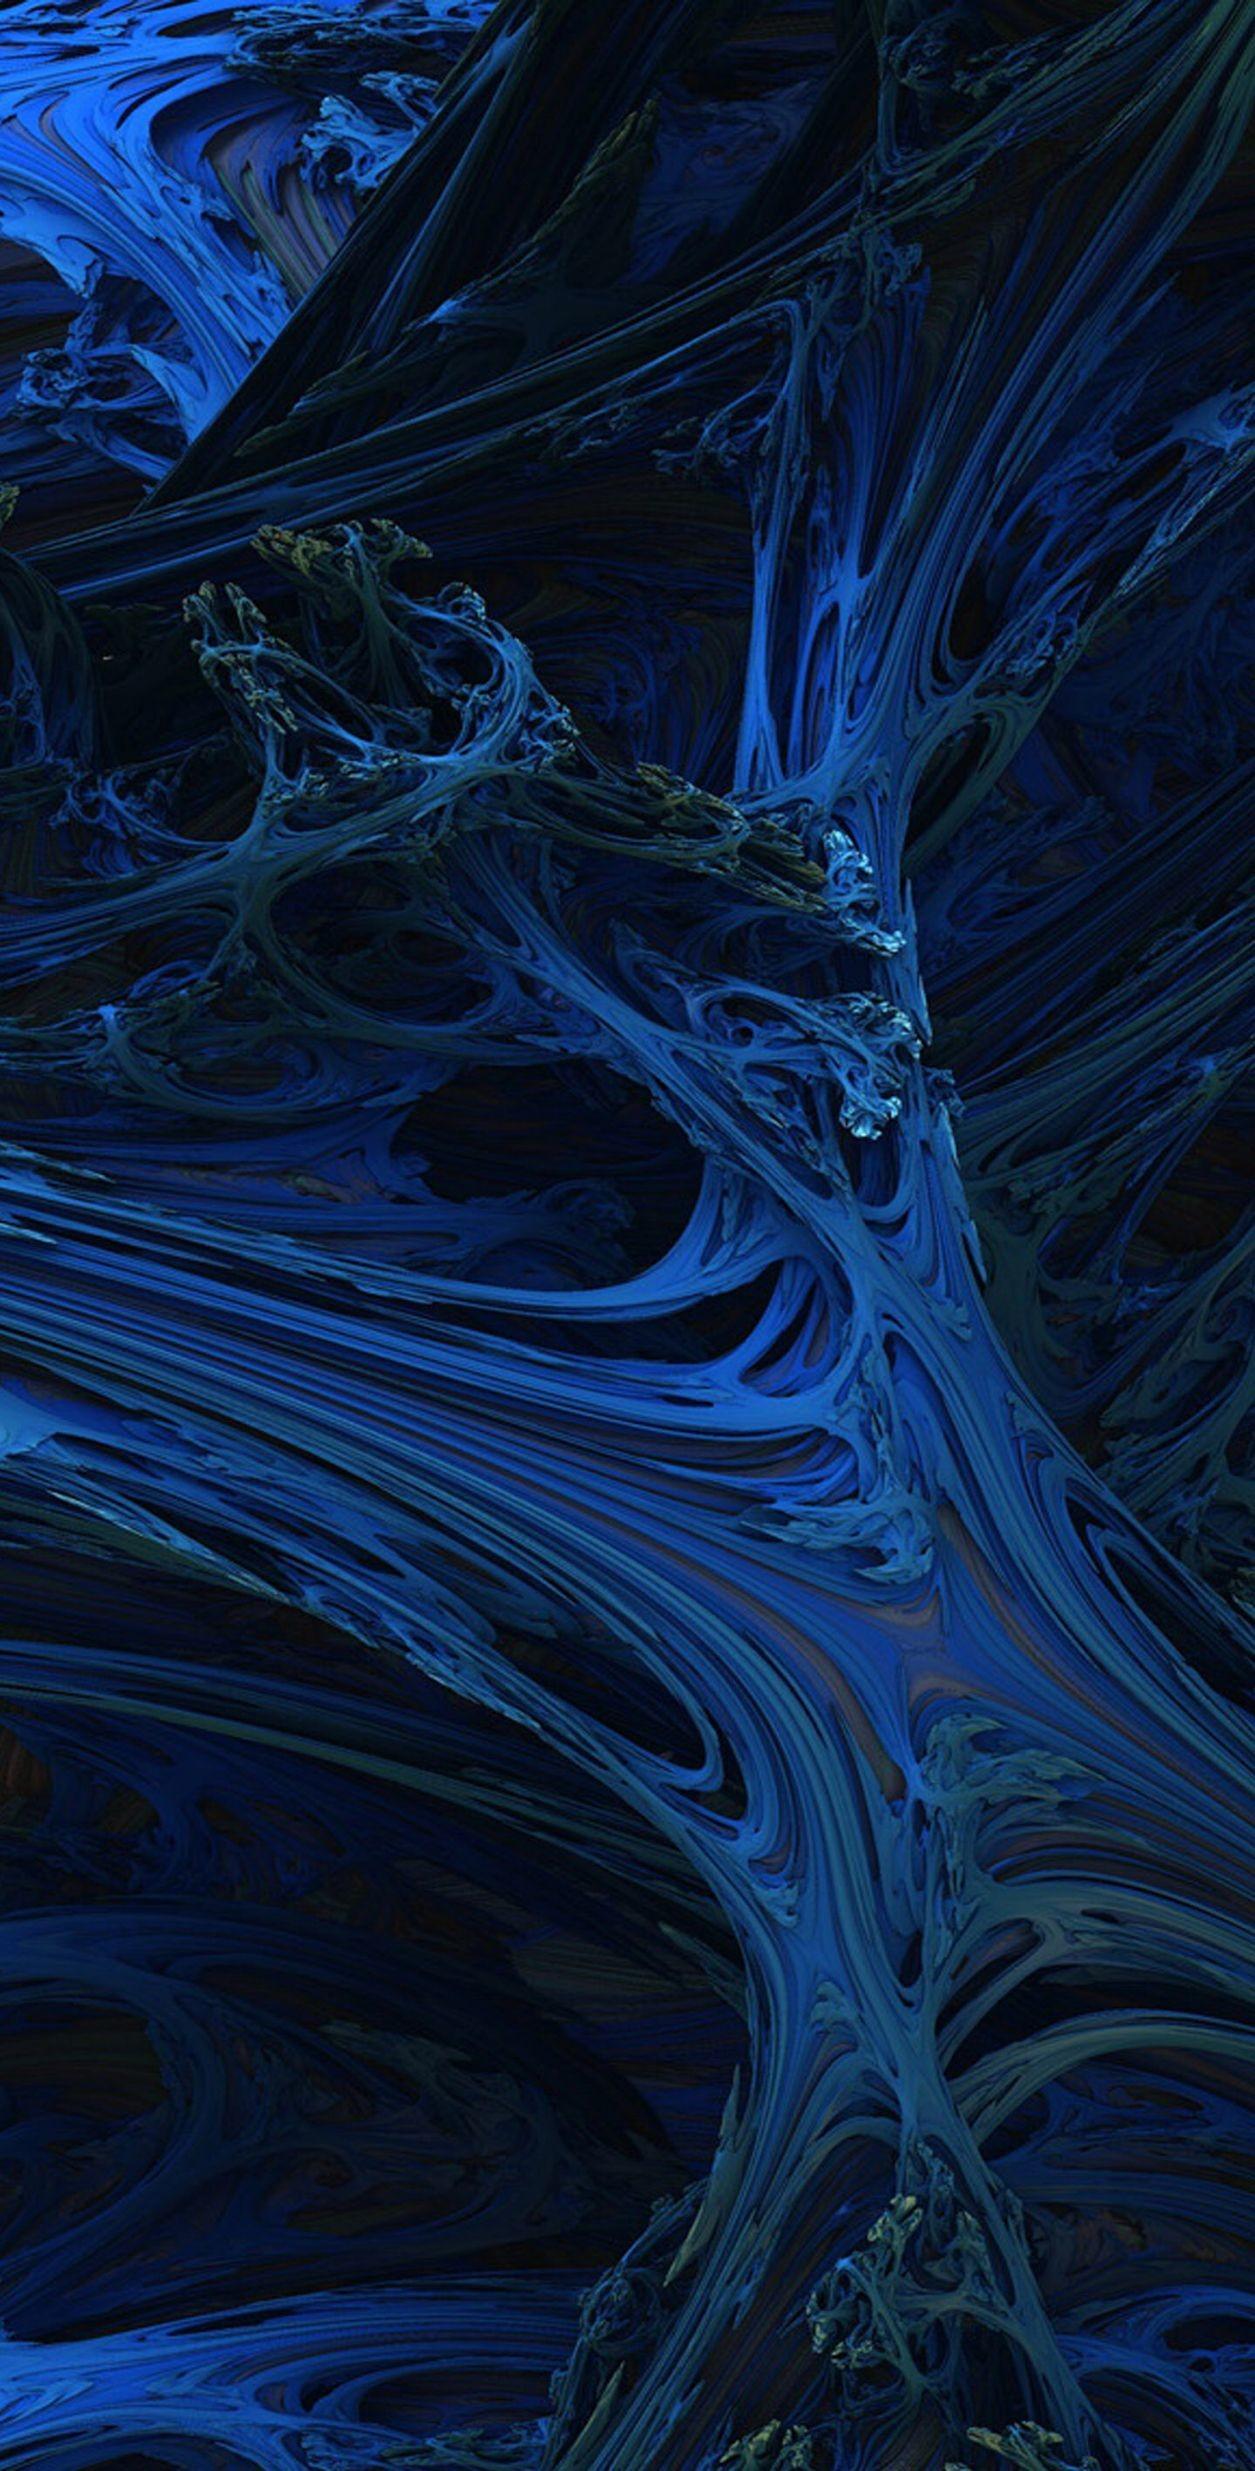 100+] Dark Blue Iphone Wallpapers | Wallpapers.com